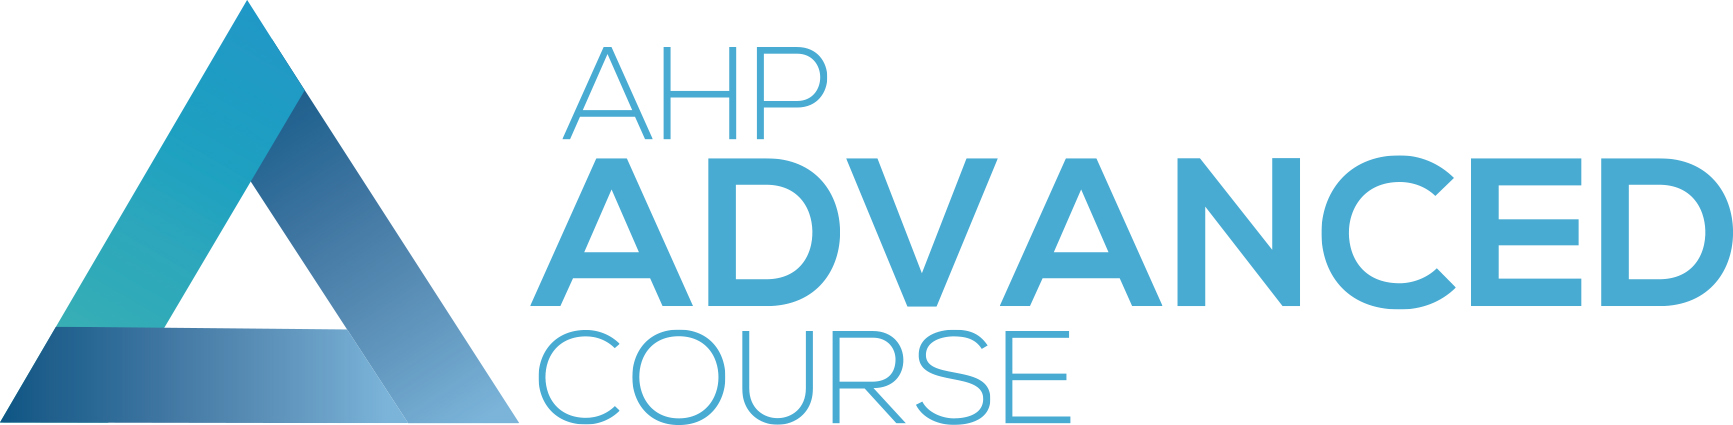 AHP Advanced Course